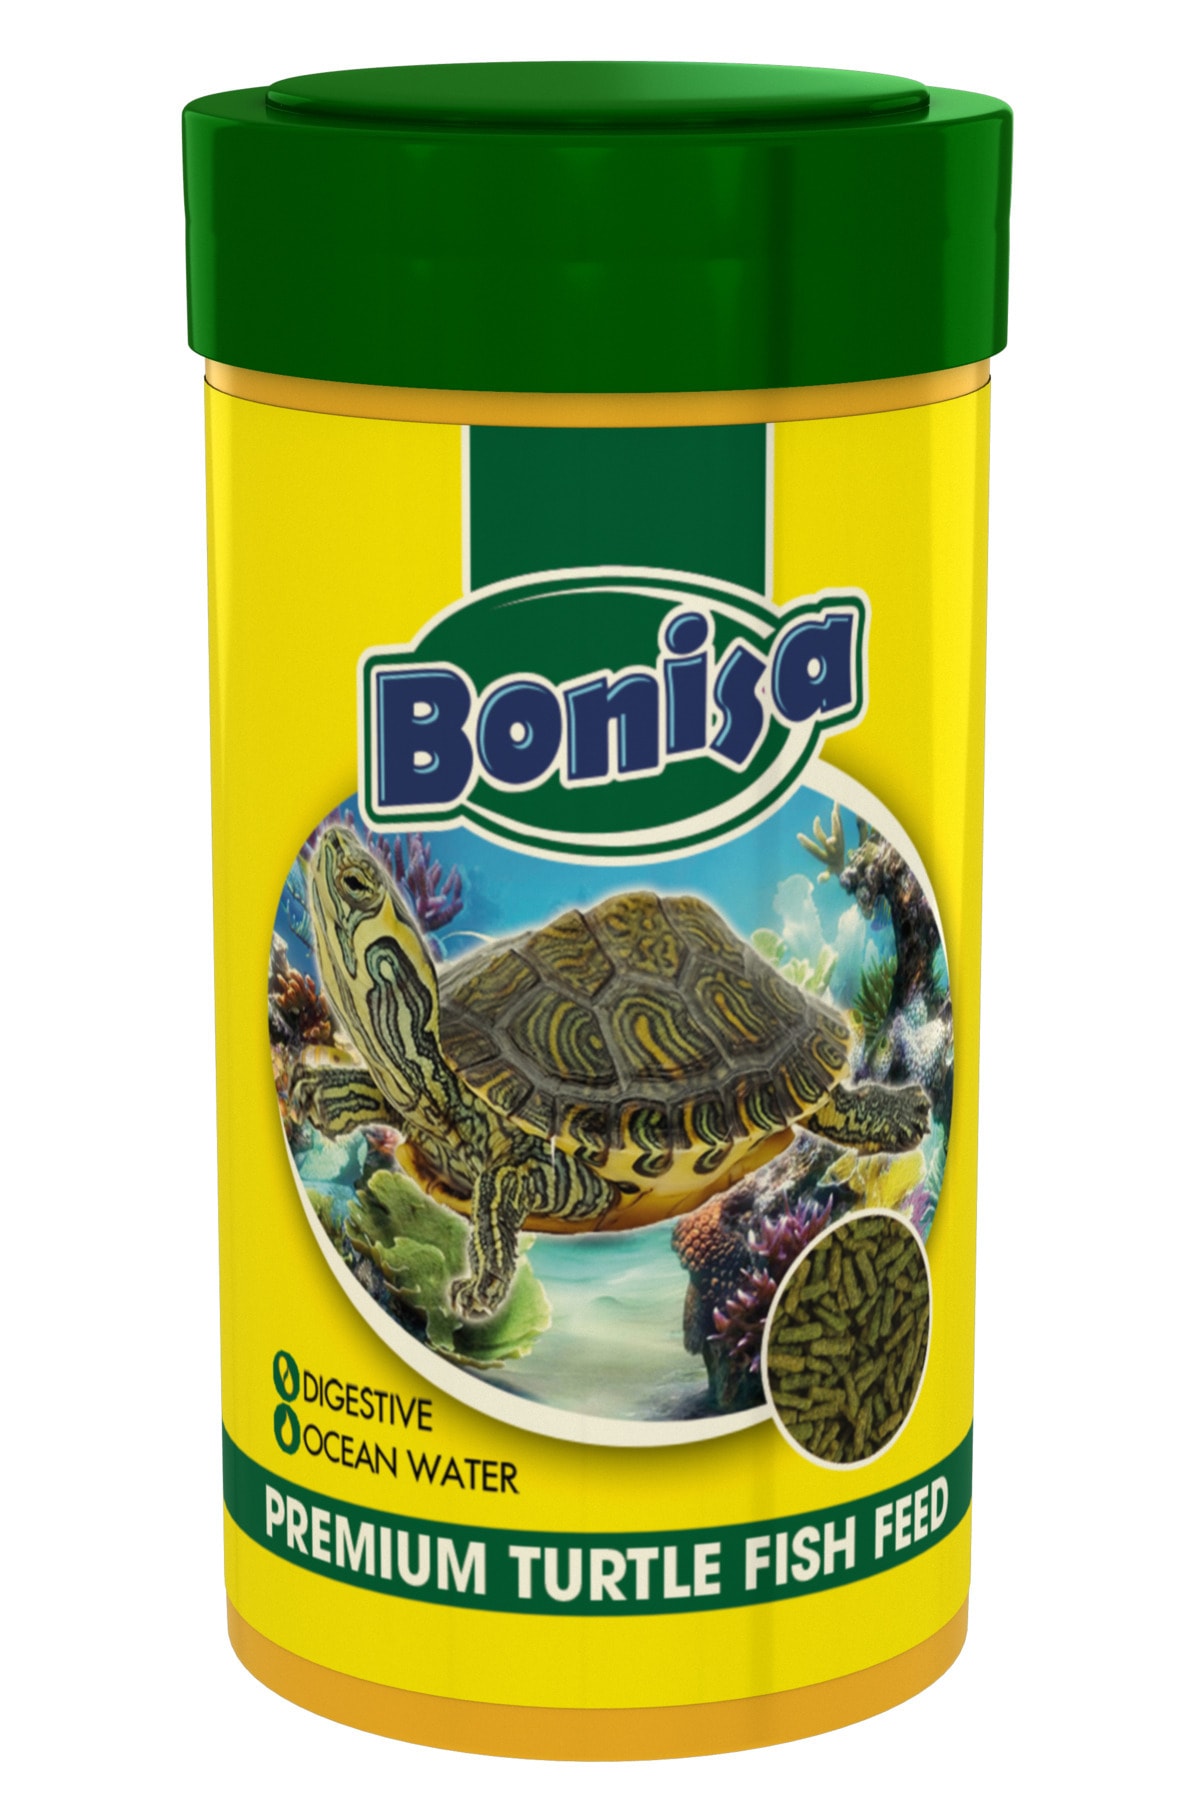 Amore Turtle Green Sticks 125 + 250 + 100 ml Bonisa, Lotus Su Kaplumbagasi Yemi ve Vitamin Seti